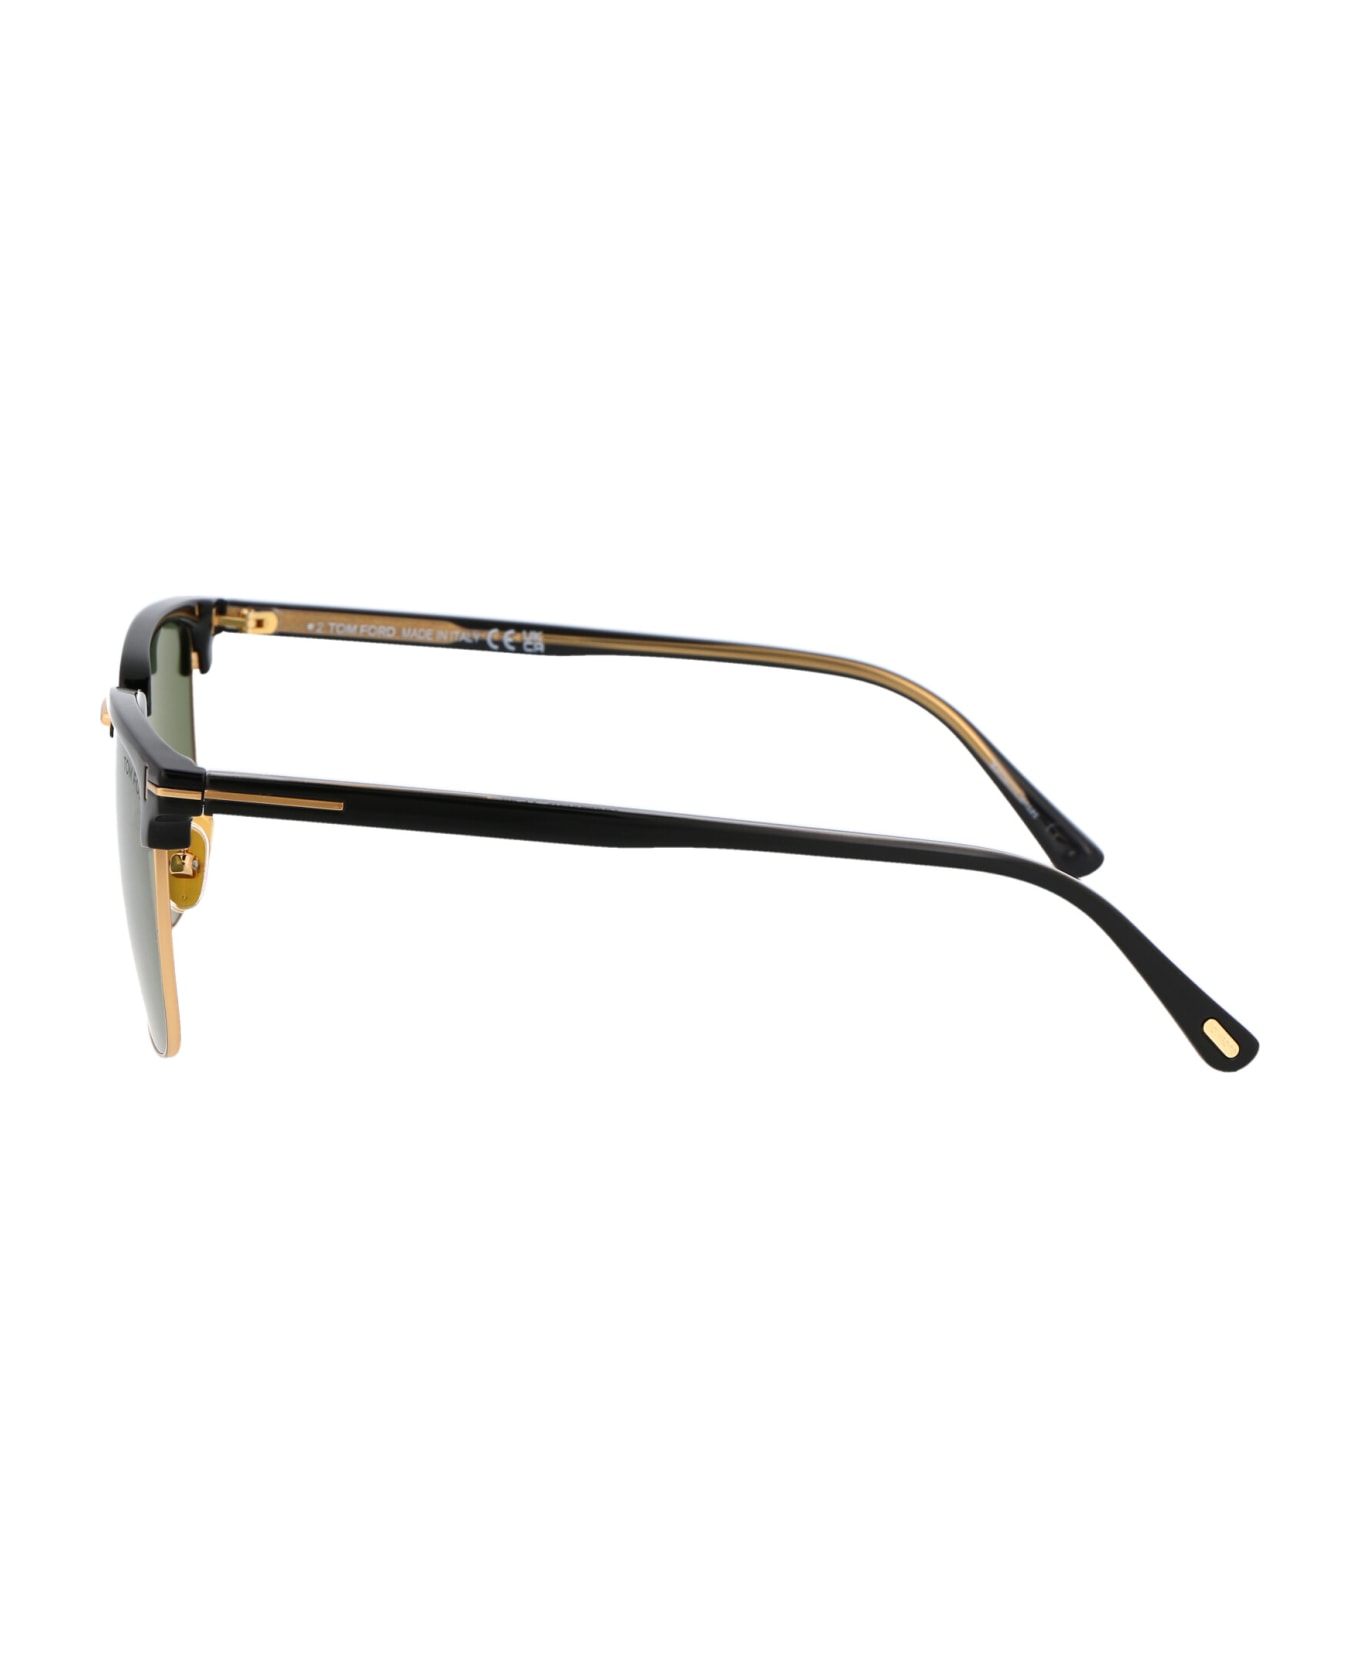 Tom Ford Eyewear Hudson-02 Sunglasses - 01saint laurent eyewear betty sunglasses